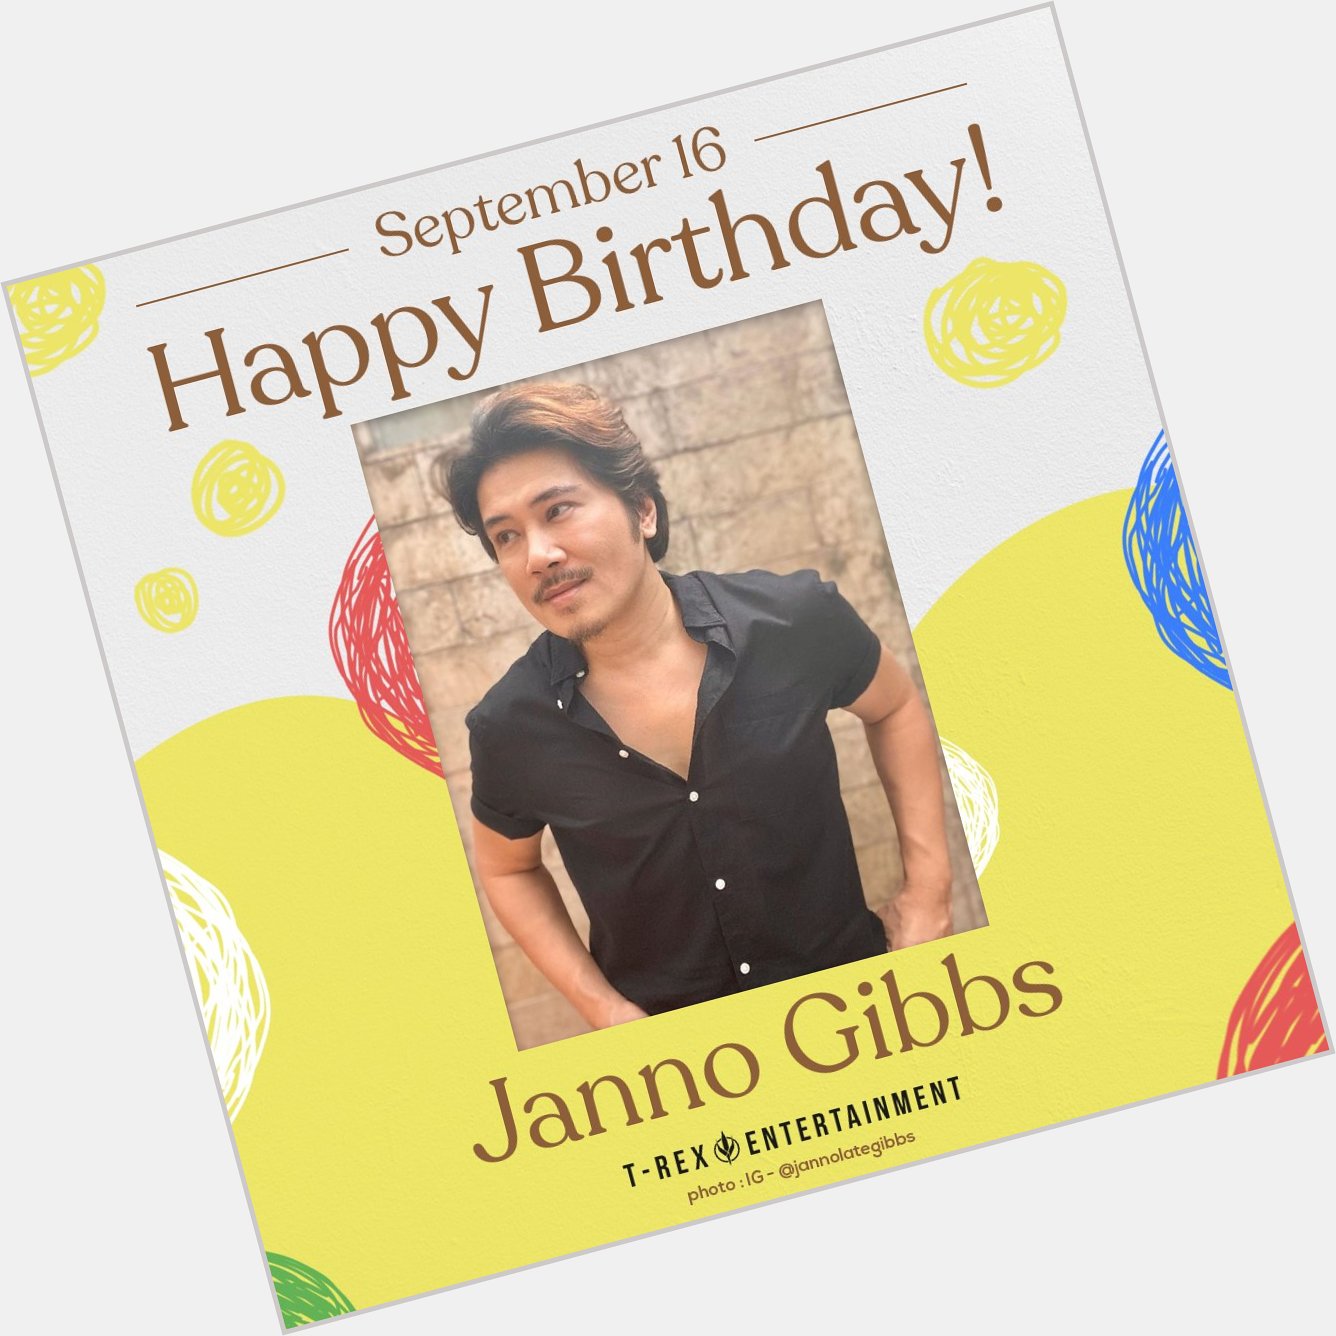 Happy 51st birthday, Janno Gibbs!   Trivia: His birth name is Janno Ronaldo Ilagan Gibbs. 